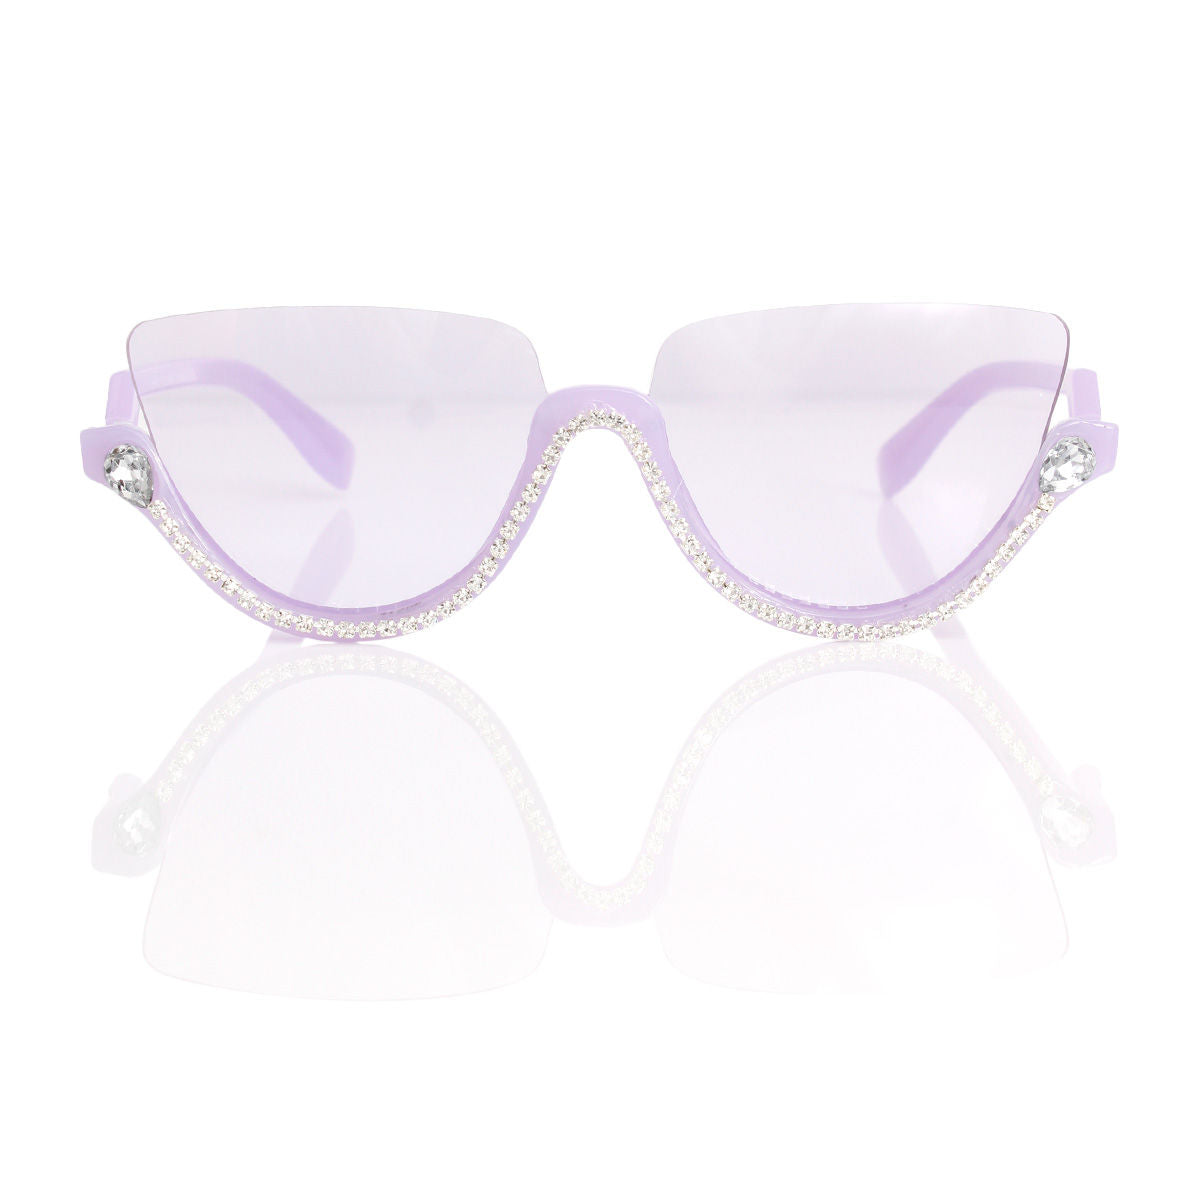 Sunglasses Half Frame Purple Eyewear for Women